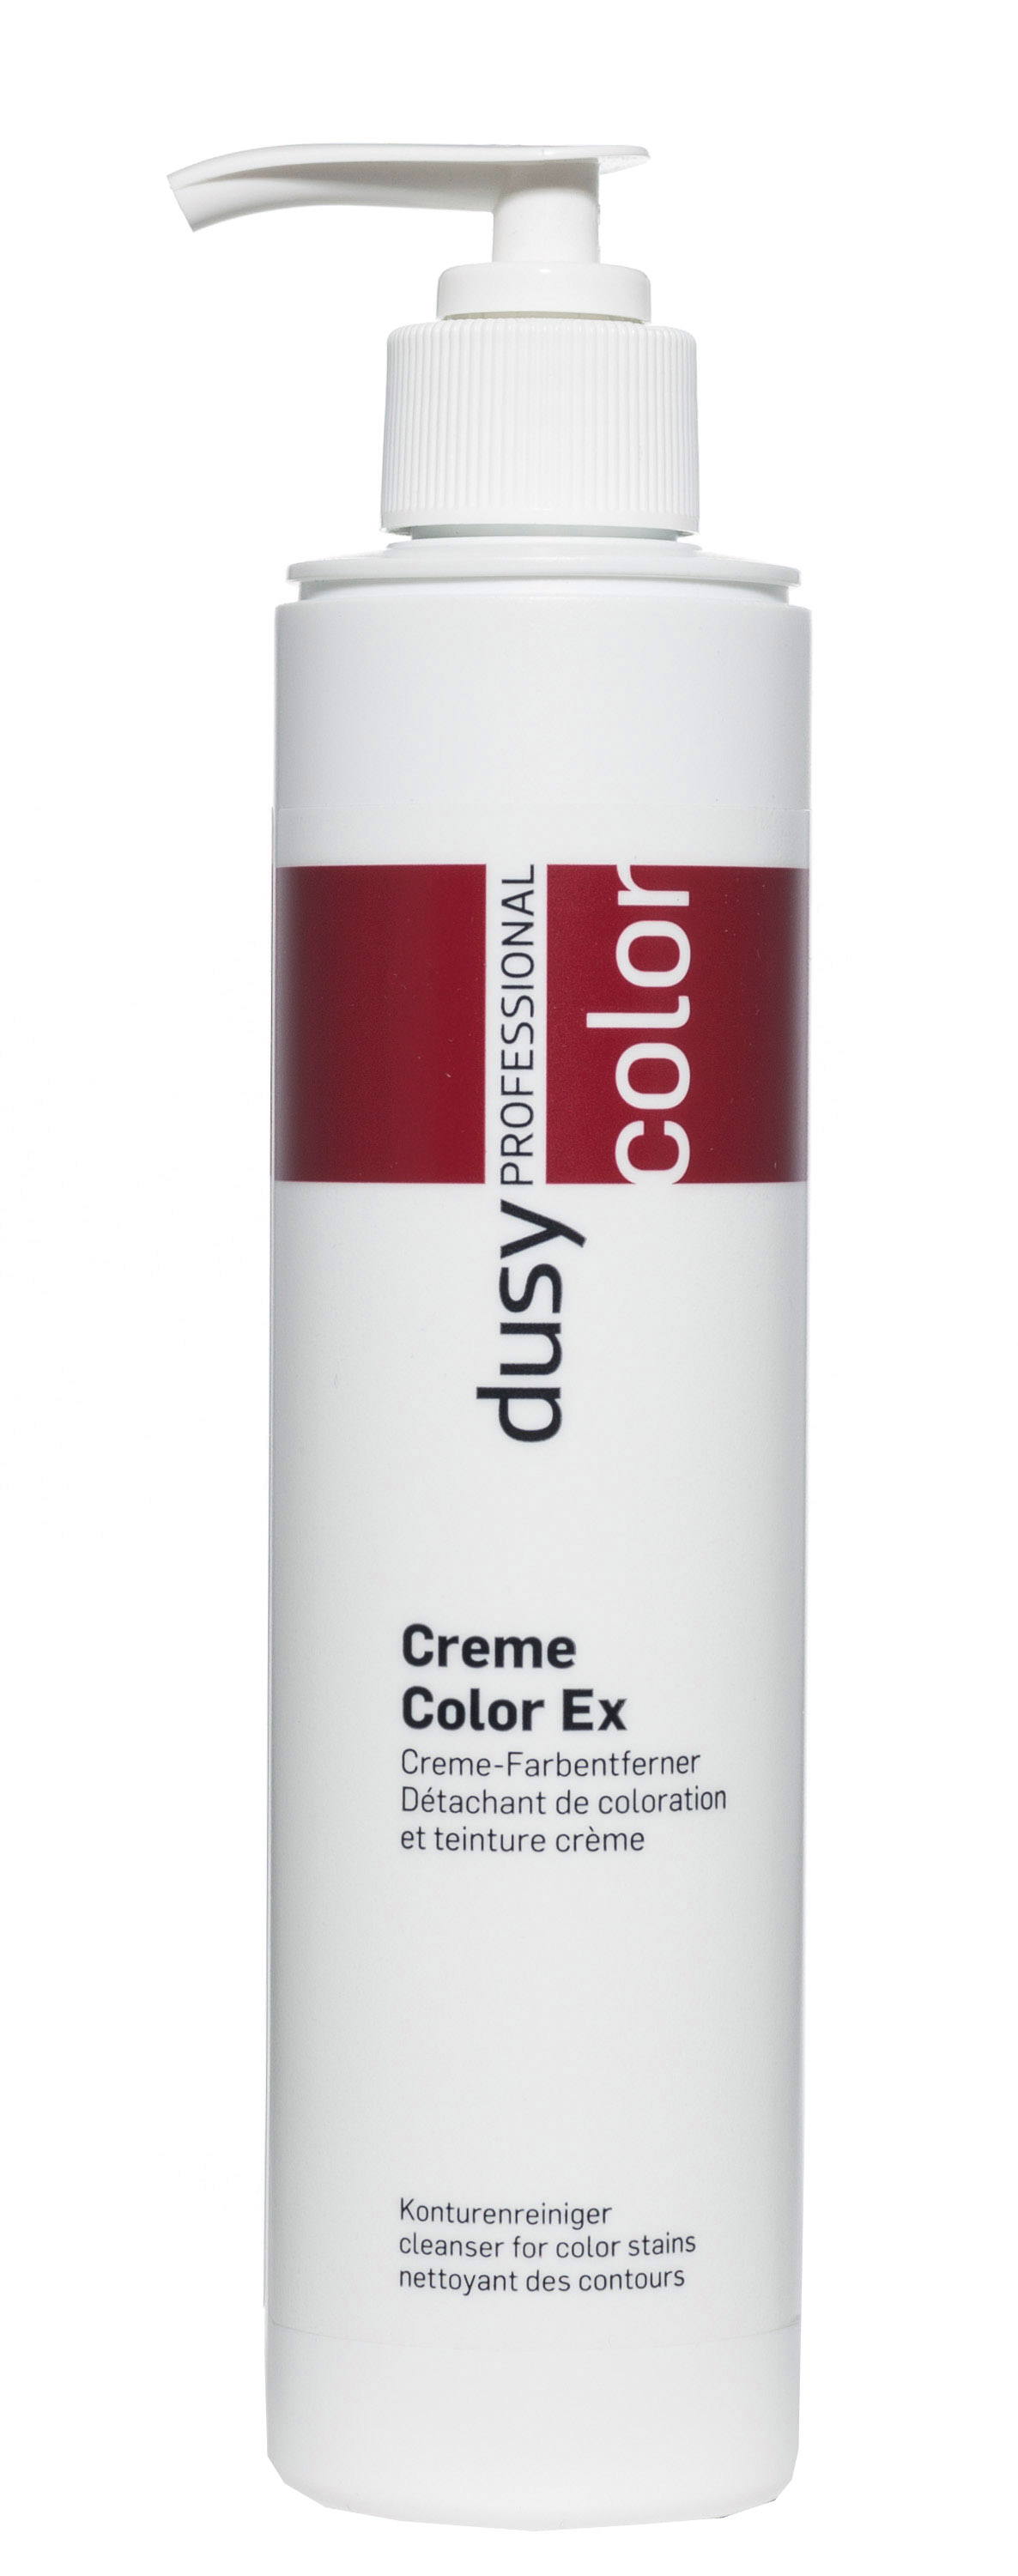 Dusy Creme Color Ex, cremige Konsistenz, 250 ml